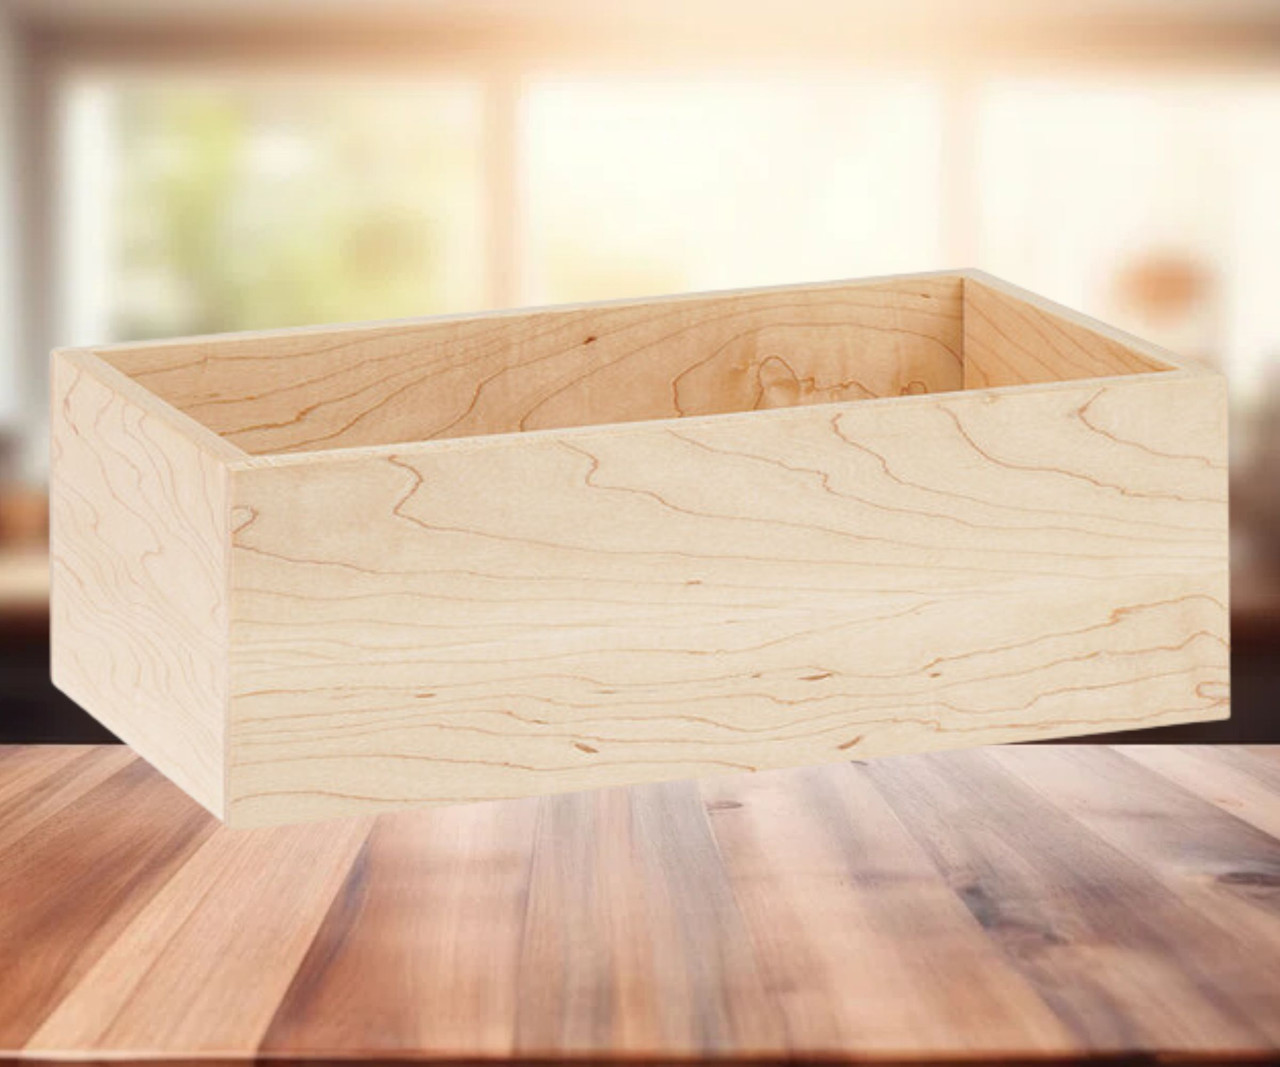 Cal-Mil Blonde 6" x 12" x 4" Maple Wood Merchandiser Box - Versatile Display Solution